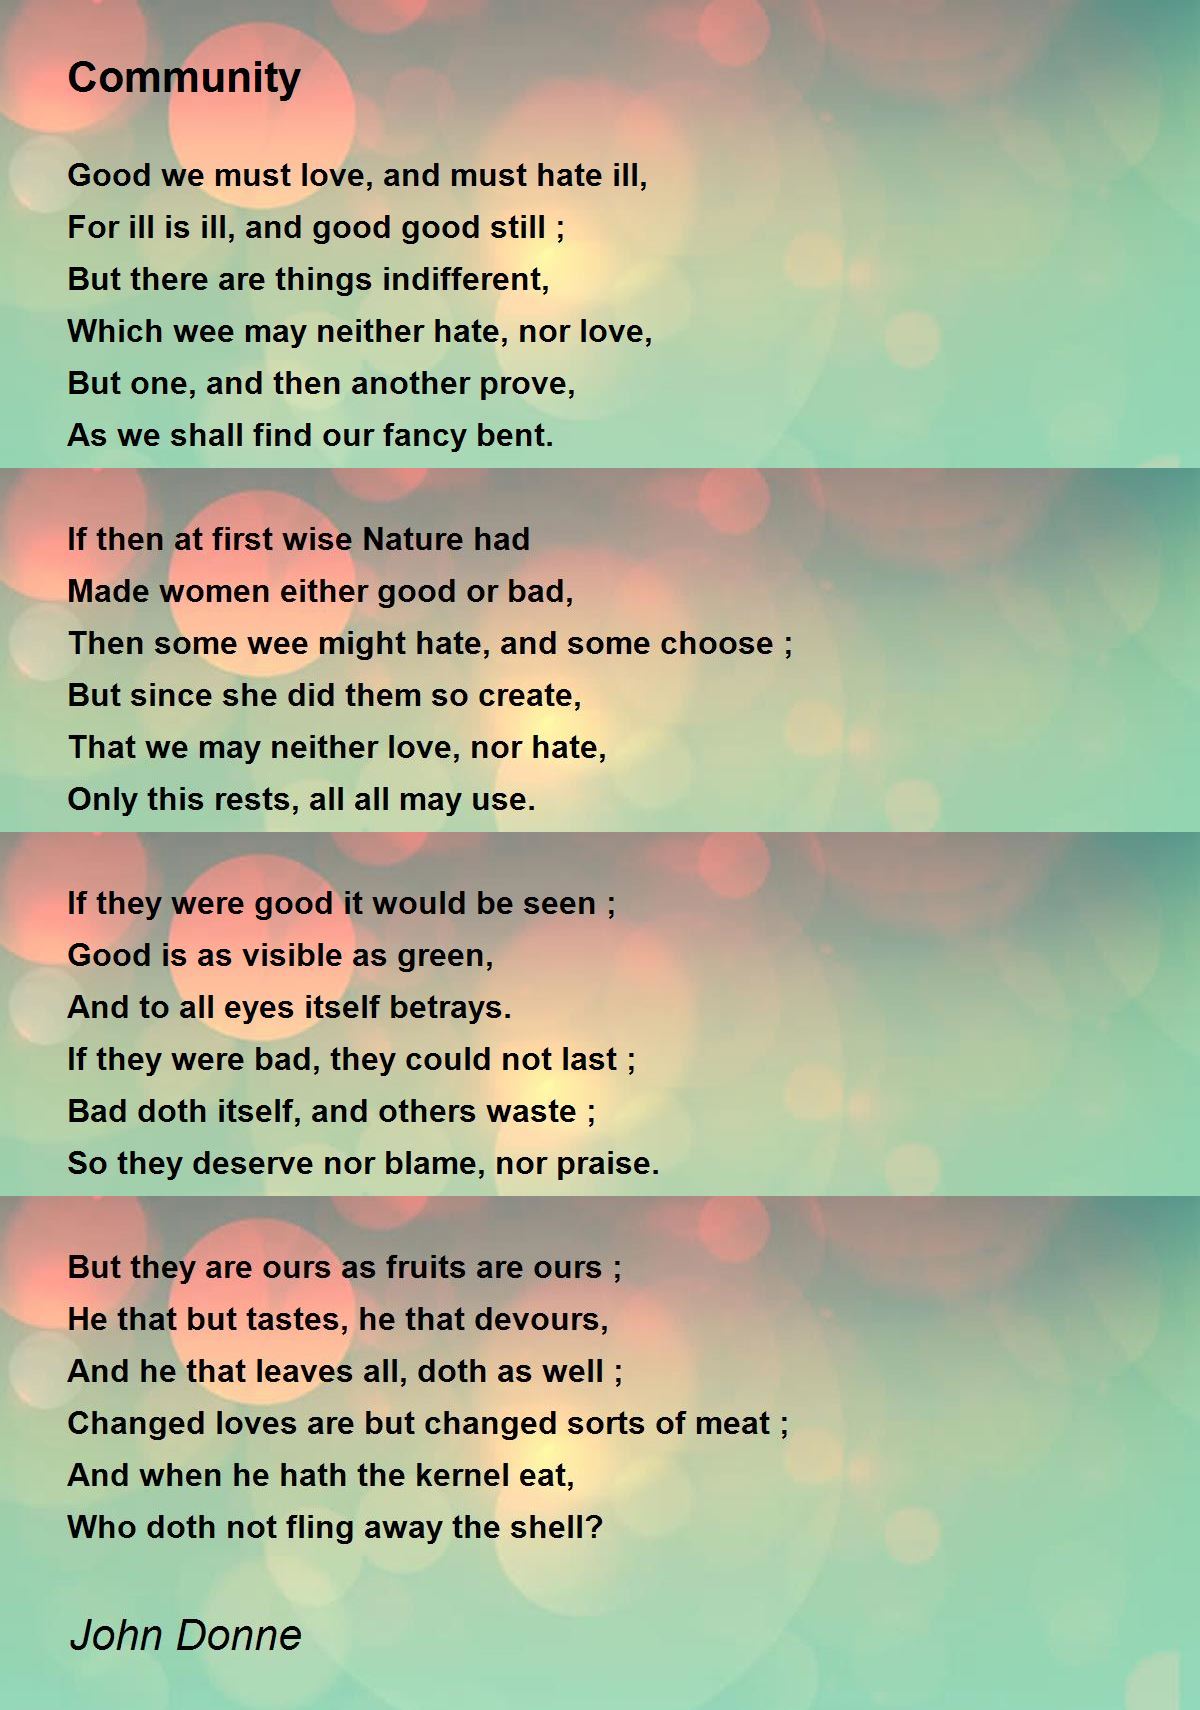 Community Poem by John Donne - Poem Hunter Comments